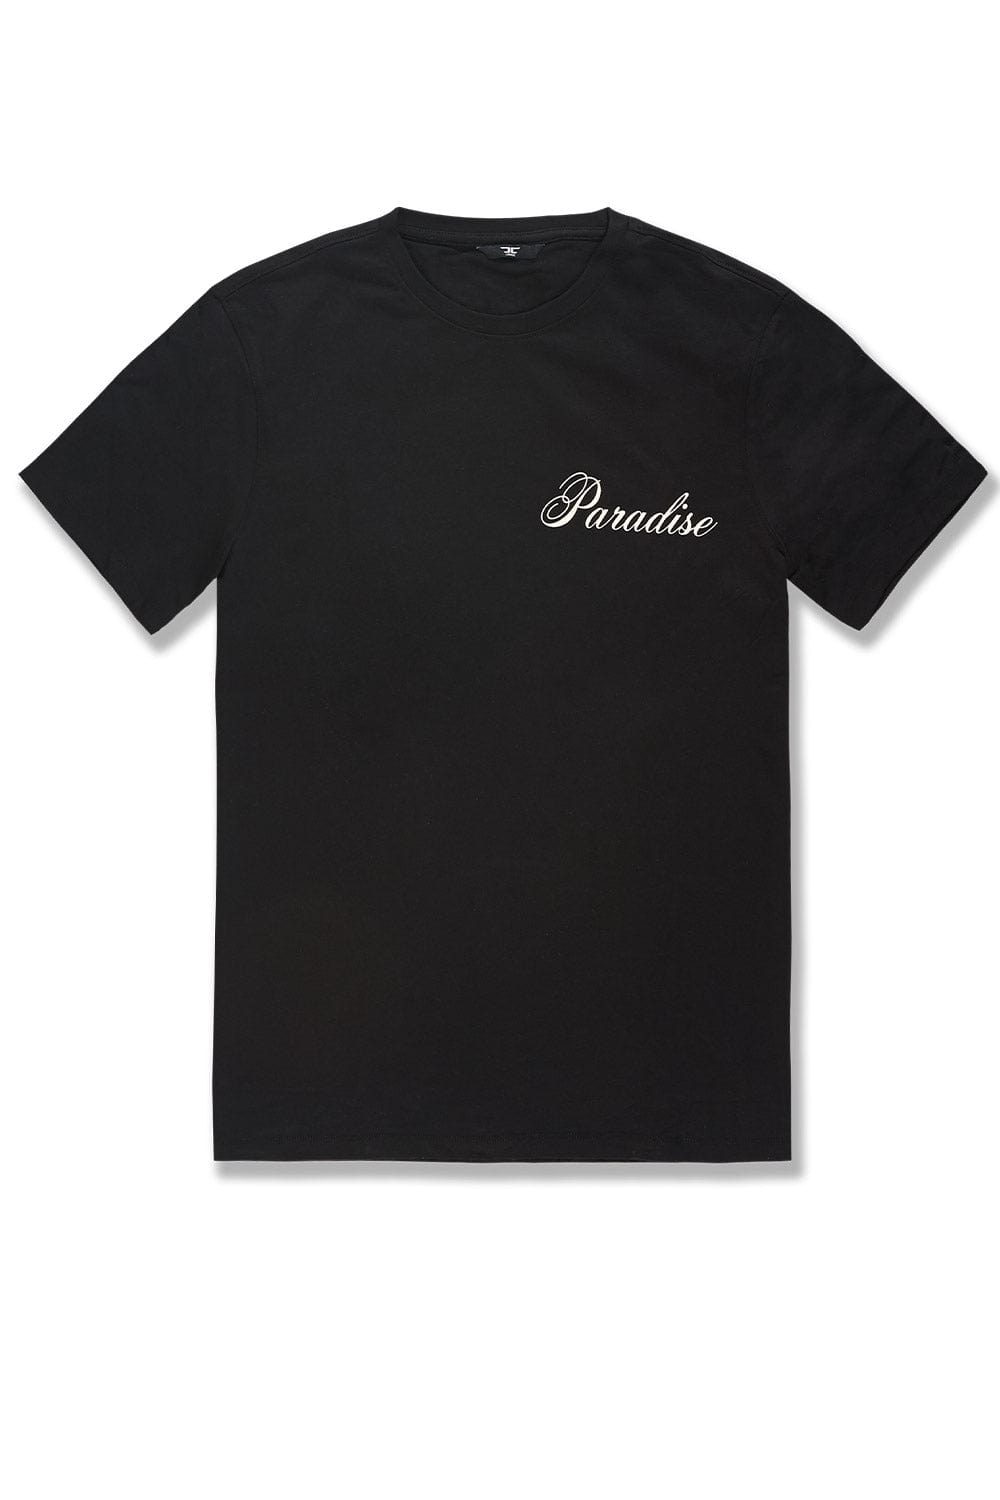 Jordan Craig Paradise T-Shirt (Black) S / Black